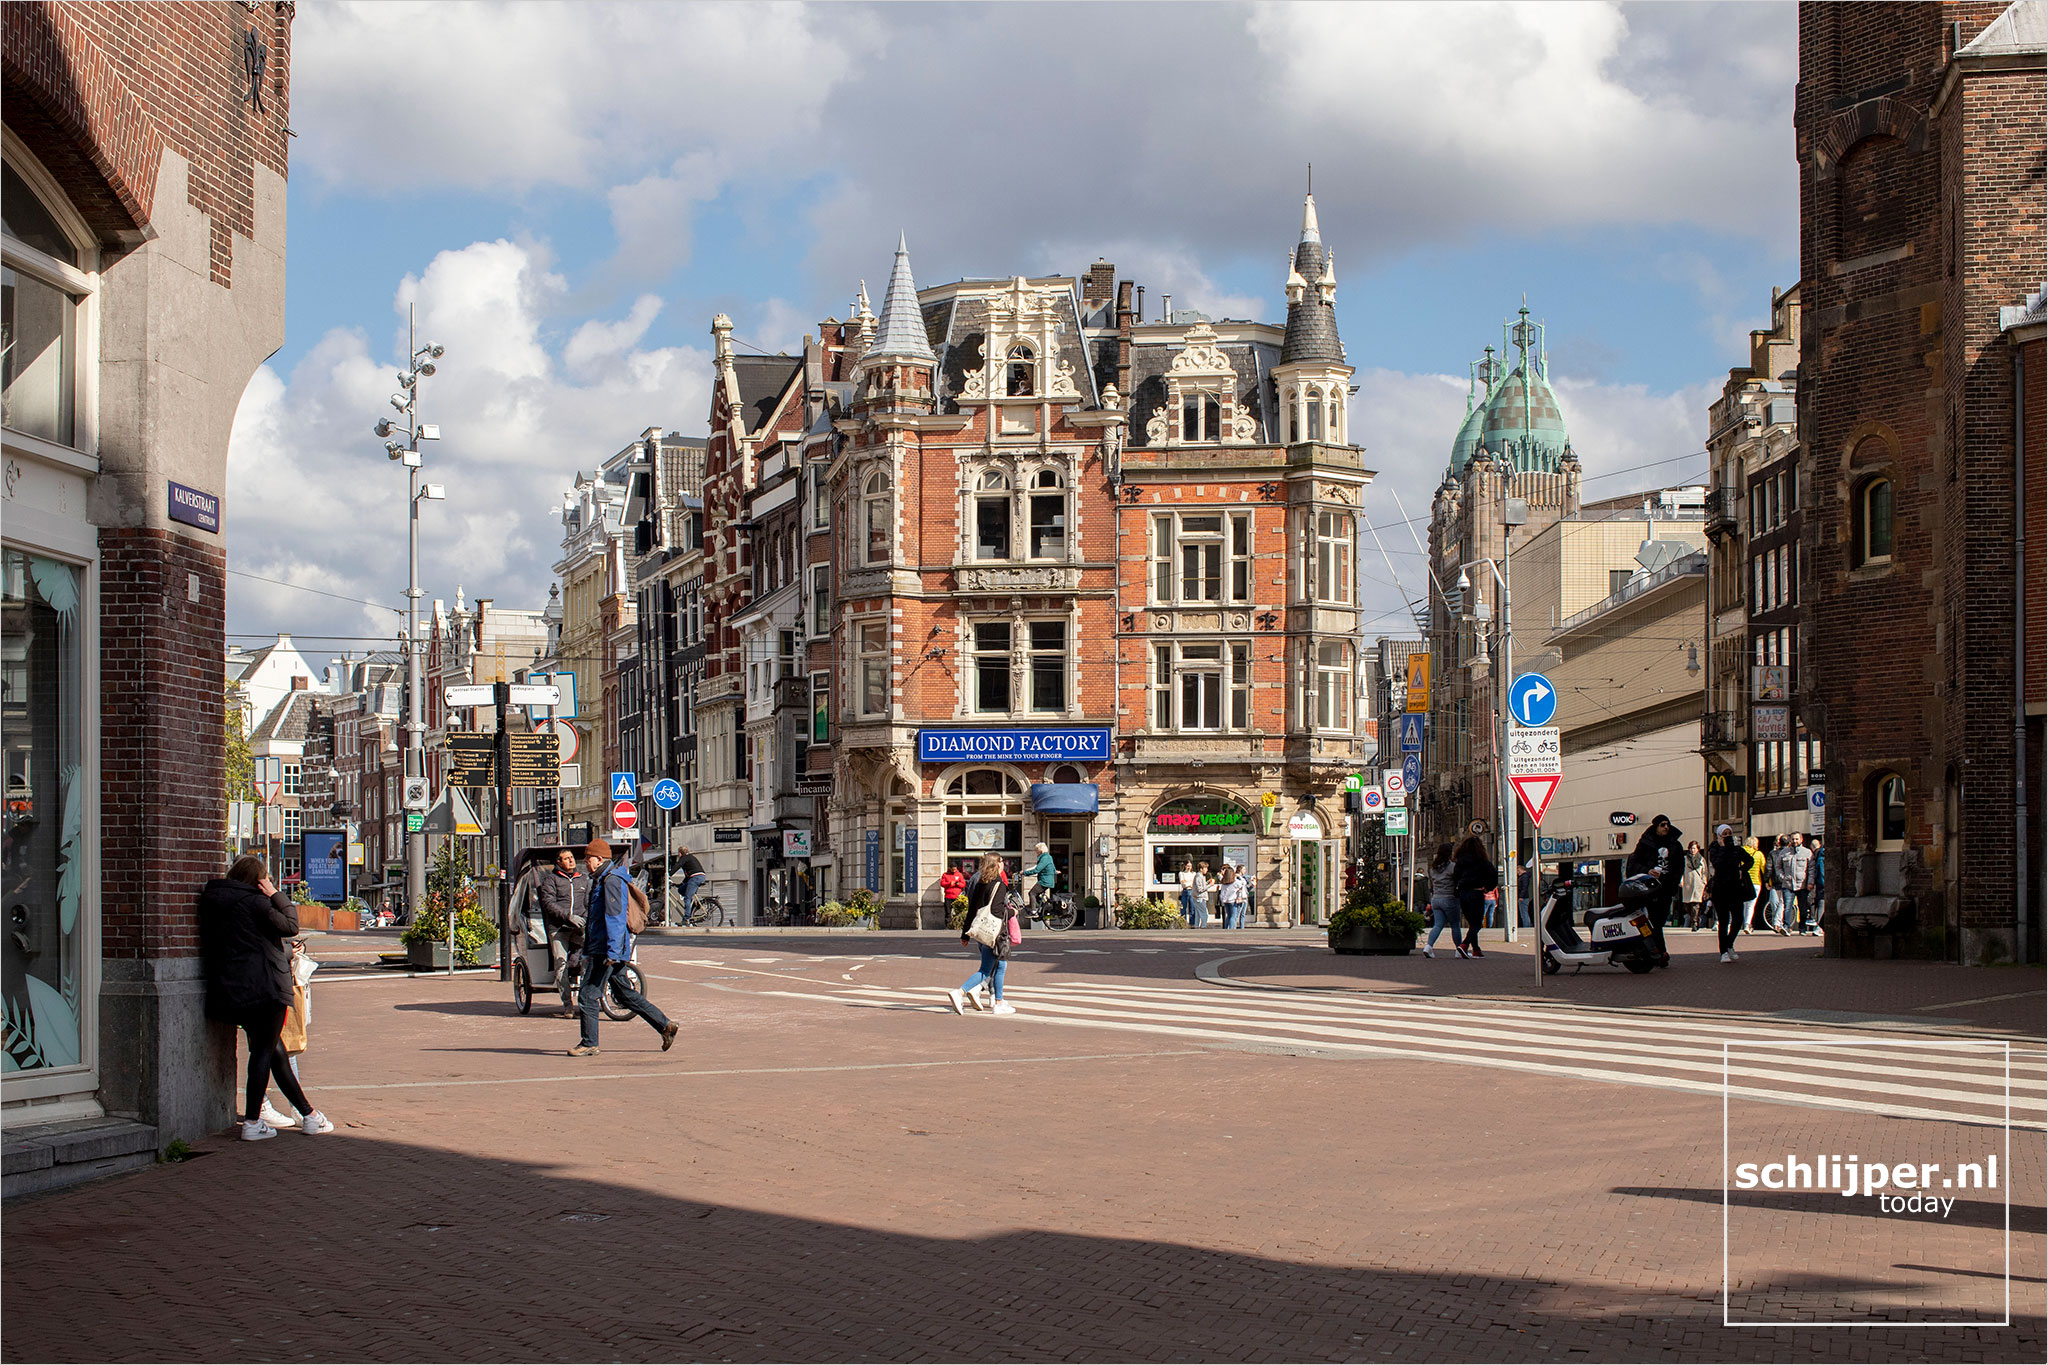 The Netherlands, Amsterdam, 7 mei 2021